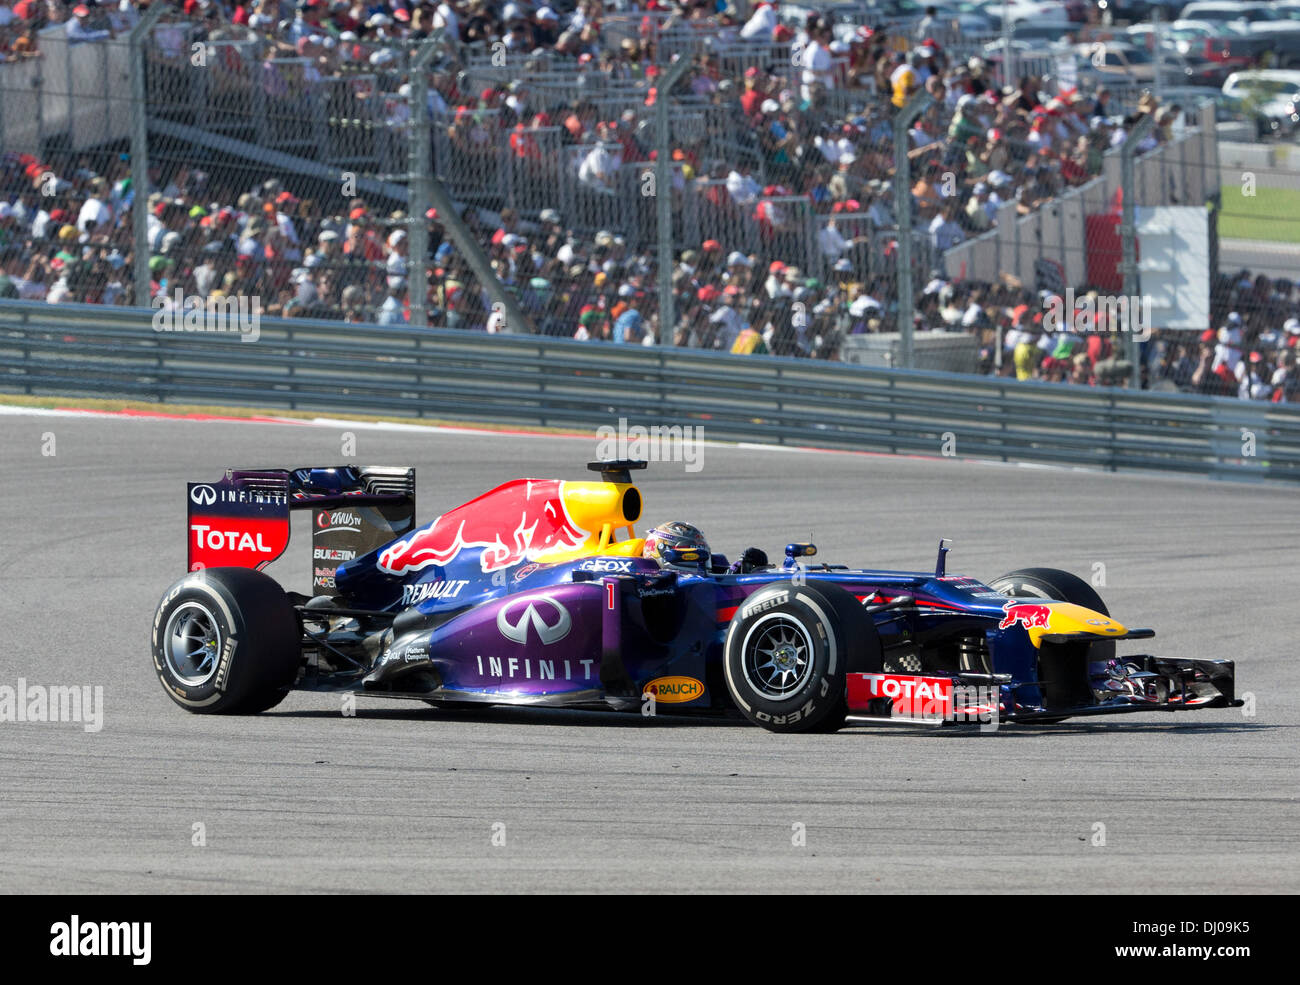 Sebastian Vettel of Red Bull Racing at the Formula 1 U.S. Grand Prix at the Circuit of the Americas track near Austin, TX. Stock Photo